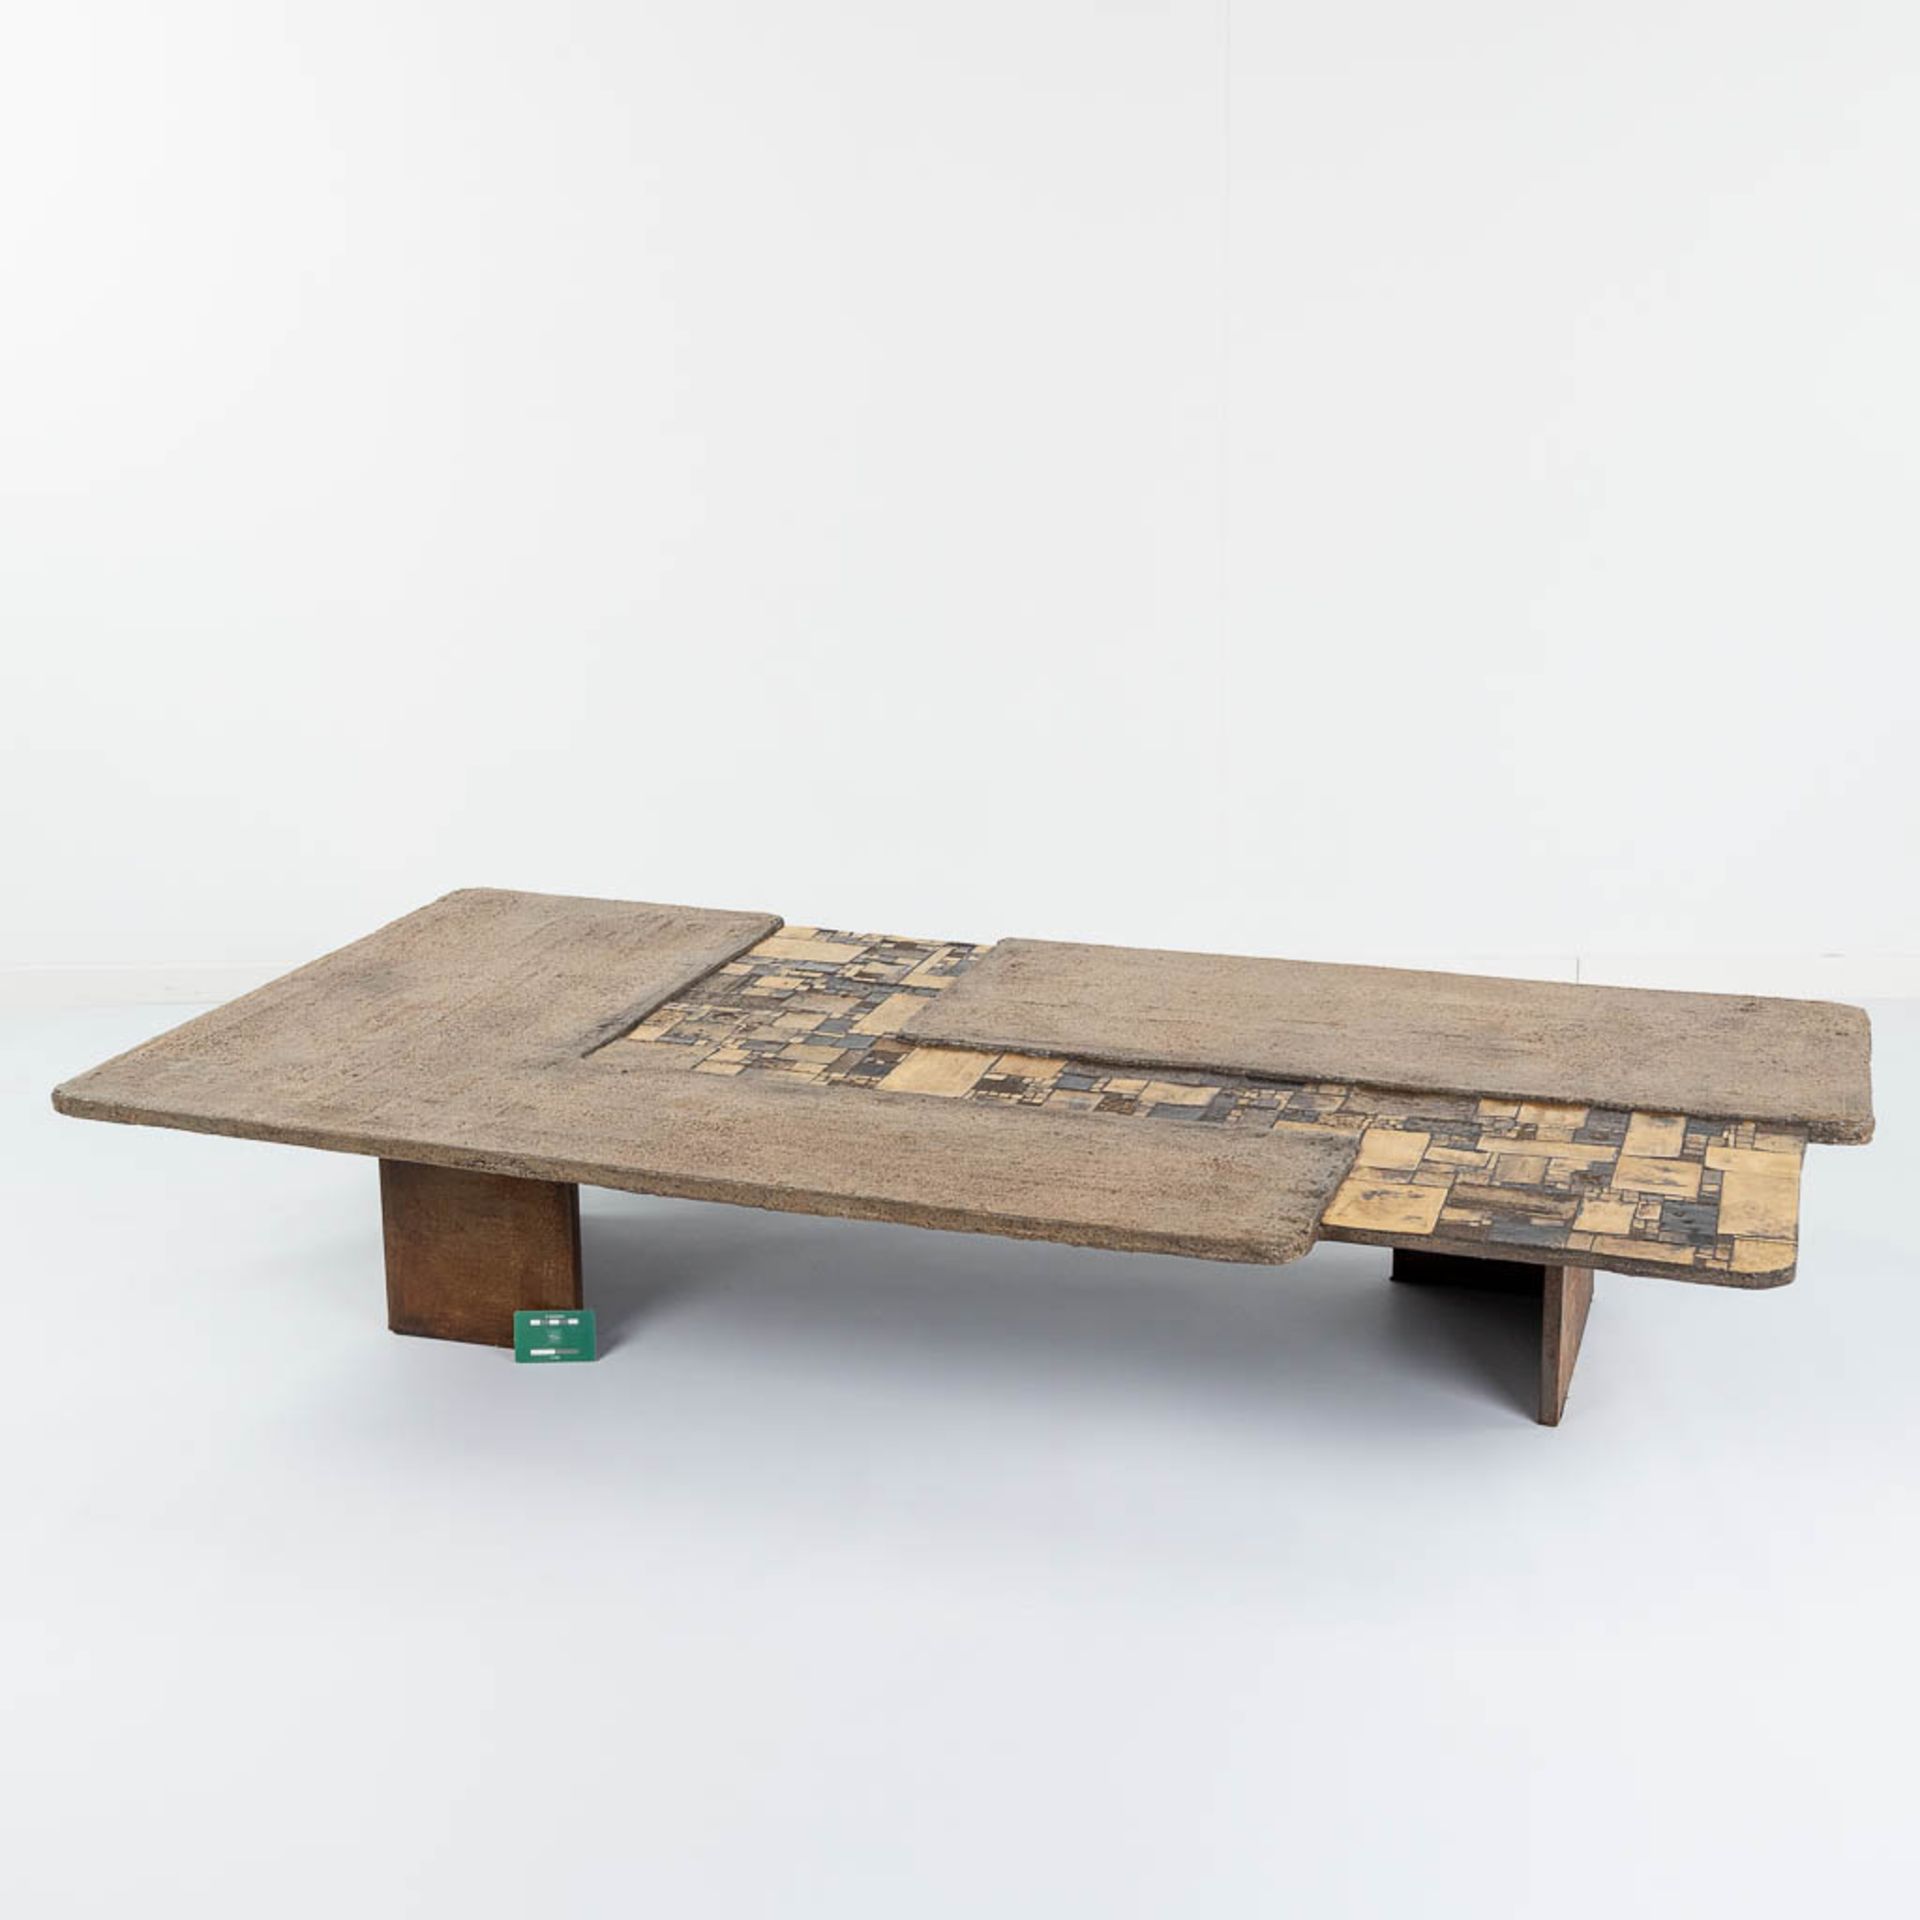 Pia MANU (XX) 'Coffee Table' gold glaze tiles and ceramics. Circa 1960. (L: 86 x W: 175 x H: 32 cm) - Image 2 of 19